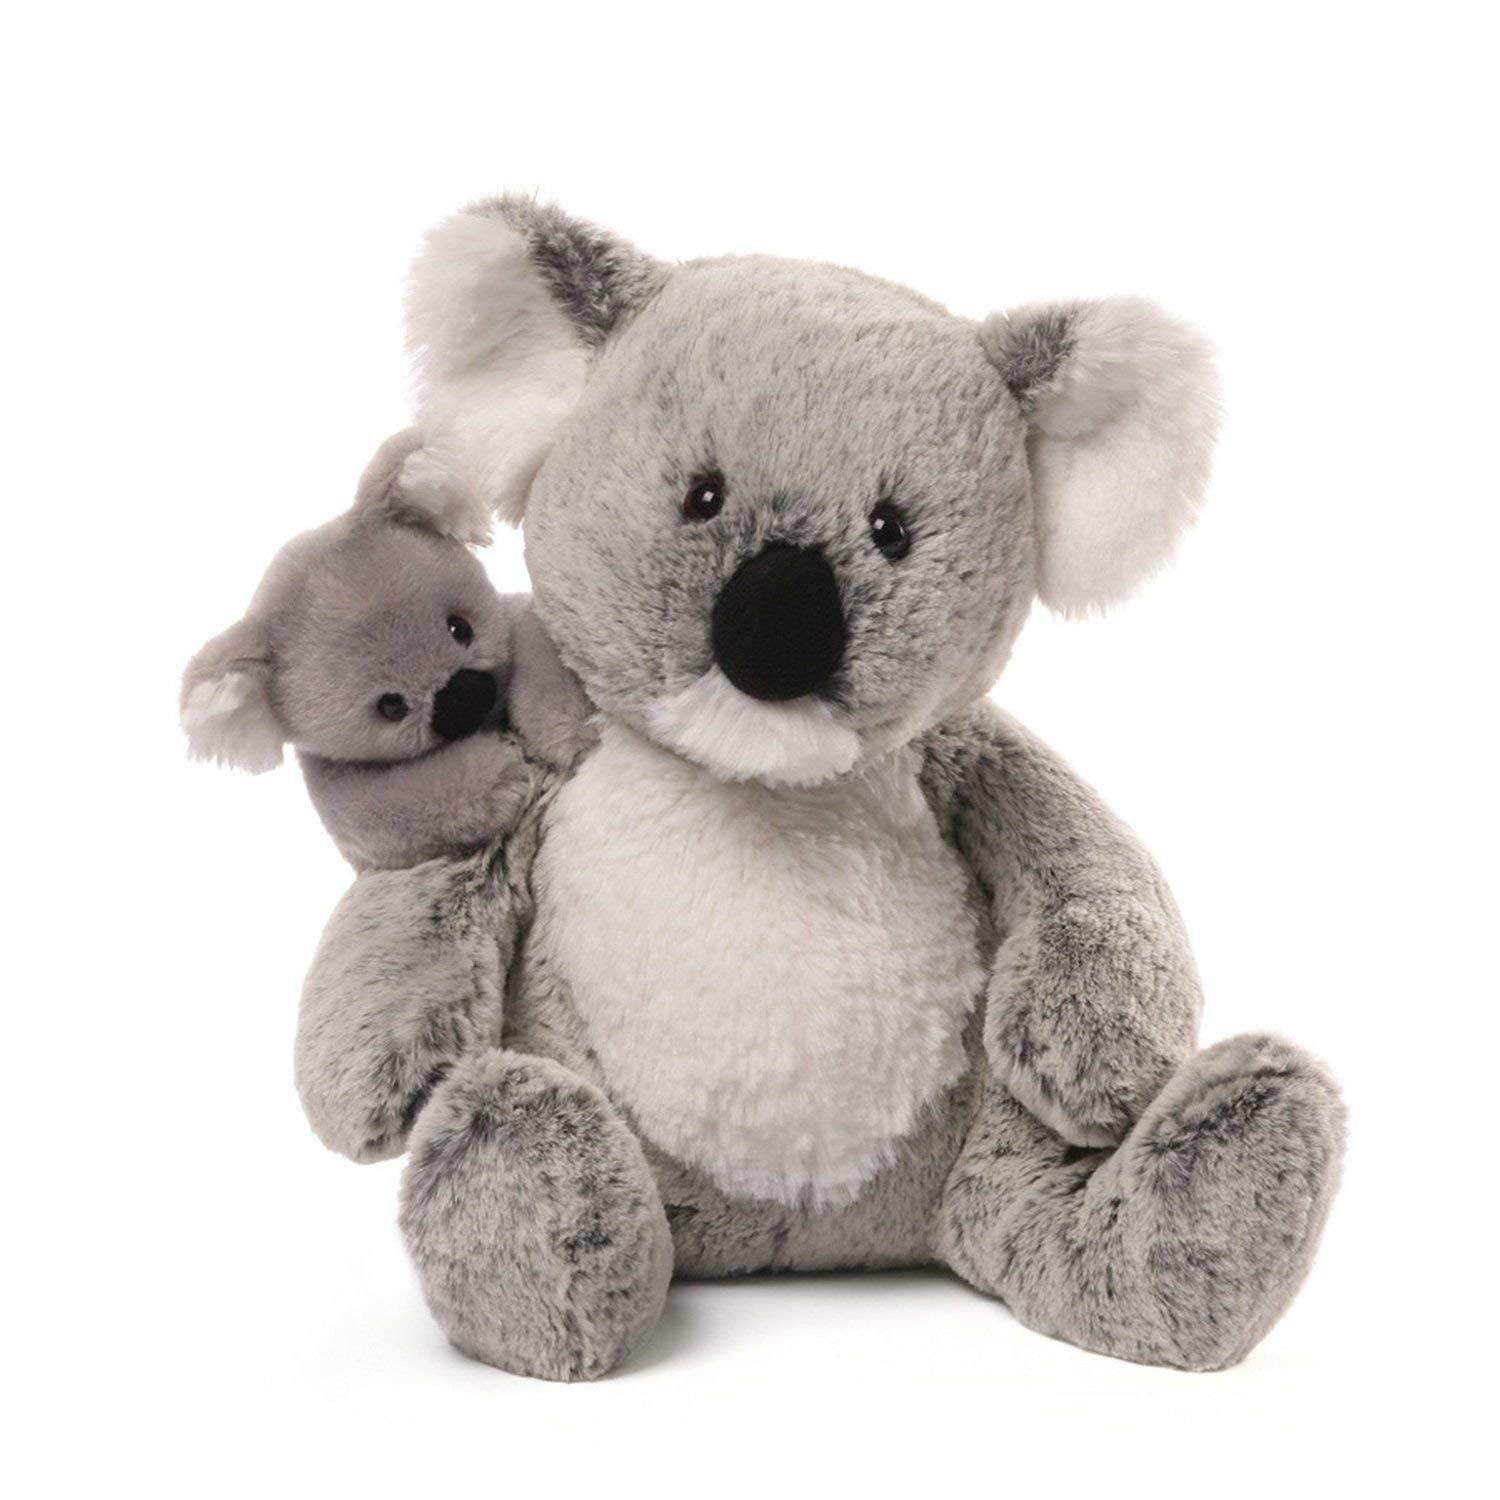 produce mother and kid design cute animal soft stuffed panda plush toy